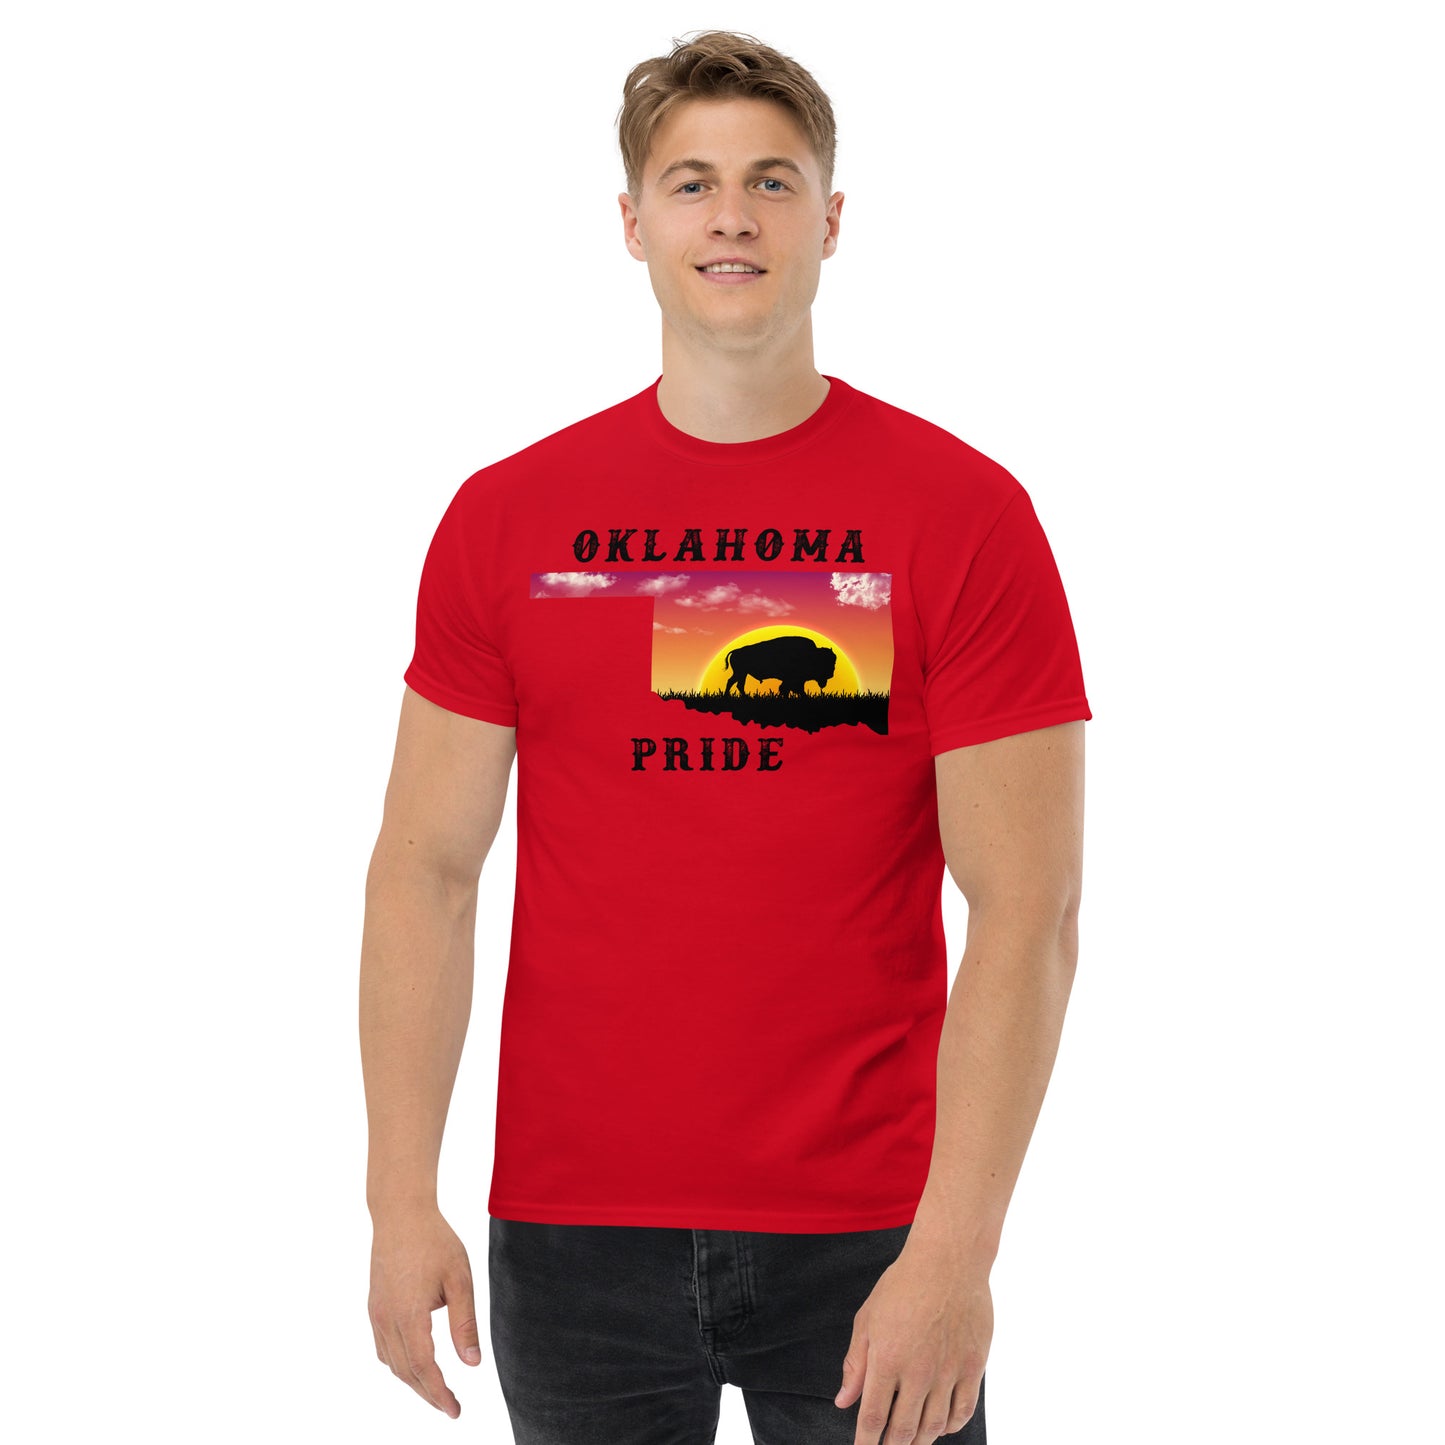 Oklahoma Sunrise Buffalo T-Shirt